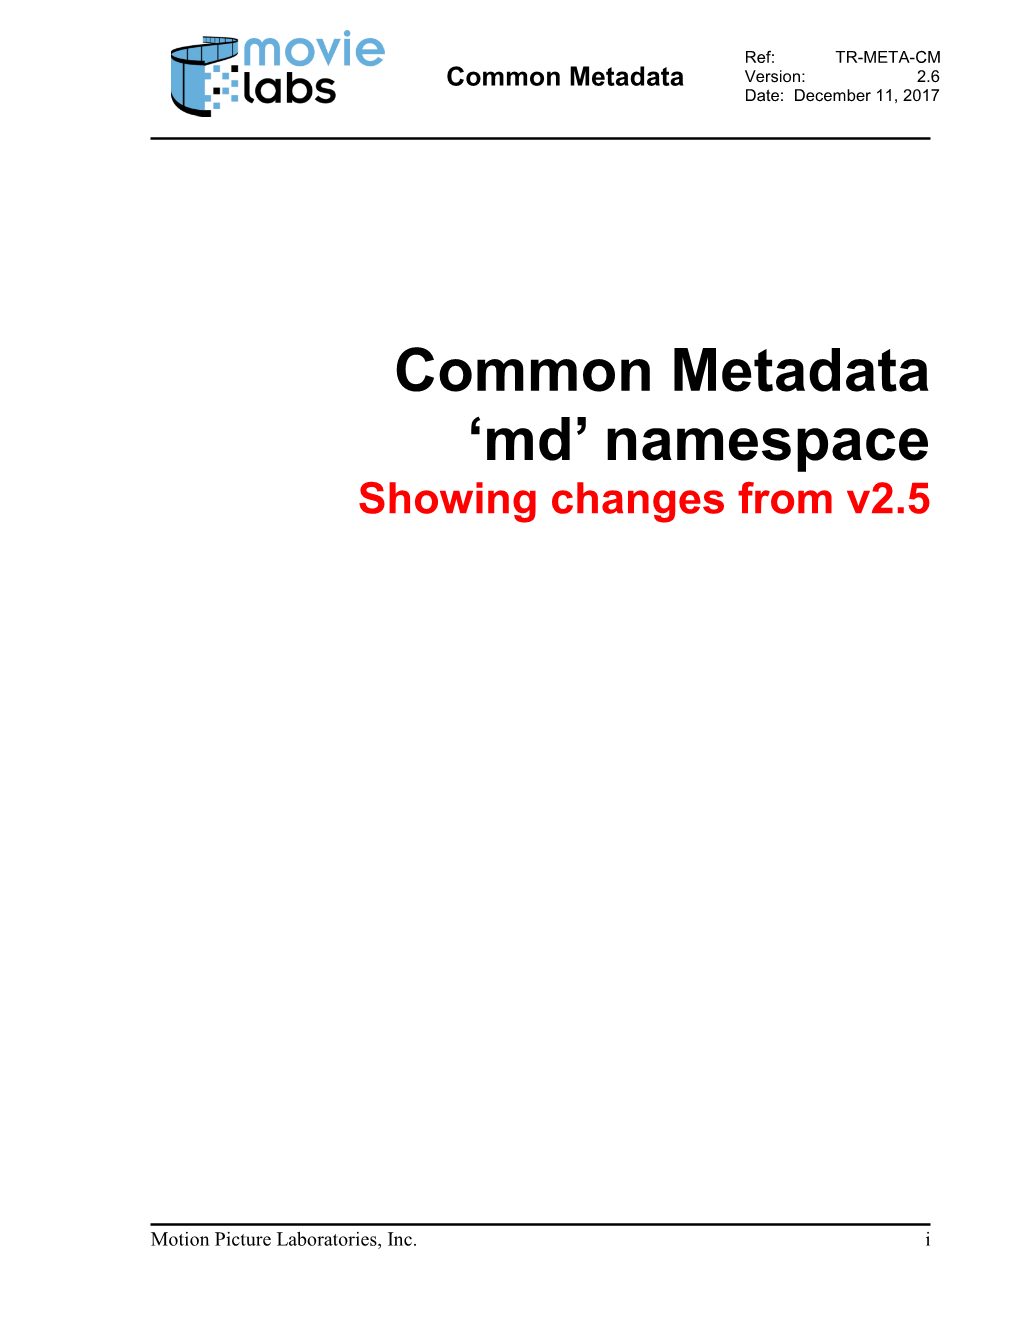 Common Metadata 'Md' Namespace